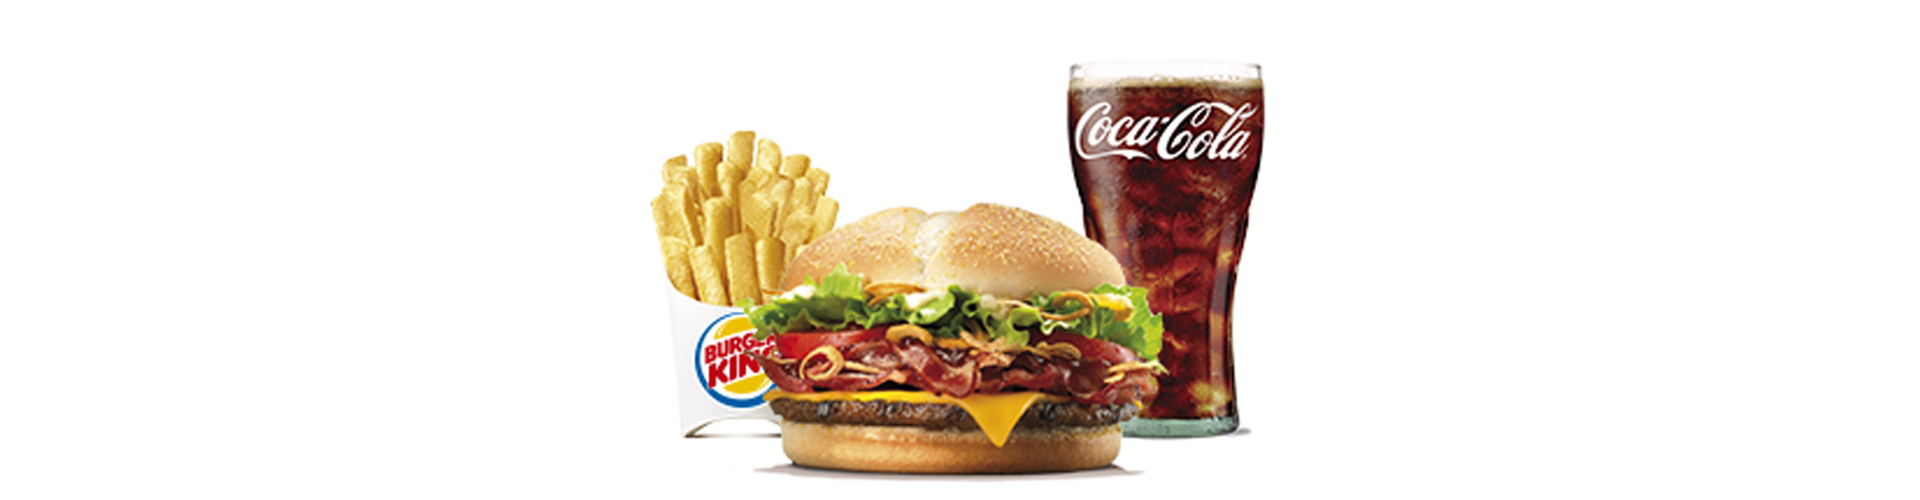 burgerking-40001713-limonada-ensalada-sandy_caramelo